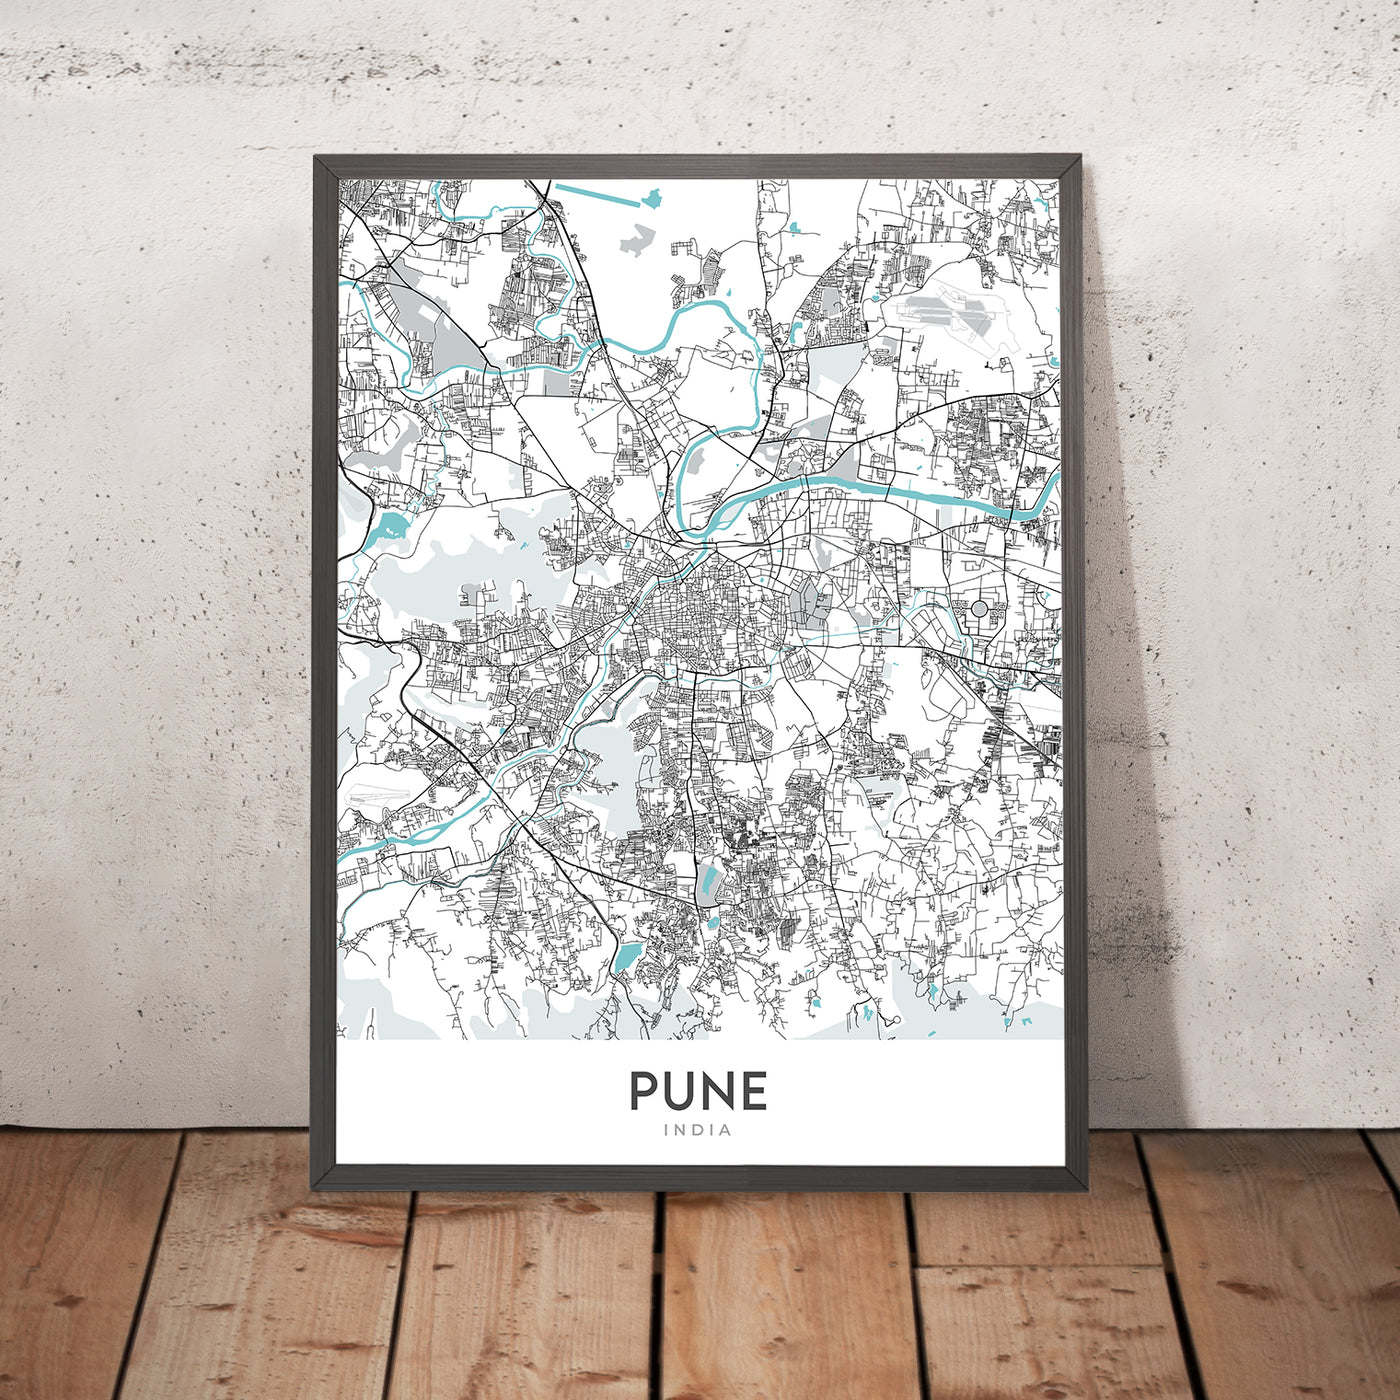 Modern City Map of Pune, India: Shivajinagar, Koregaon Park, Aga Khan Palace, FC Road, Pashan Lake